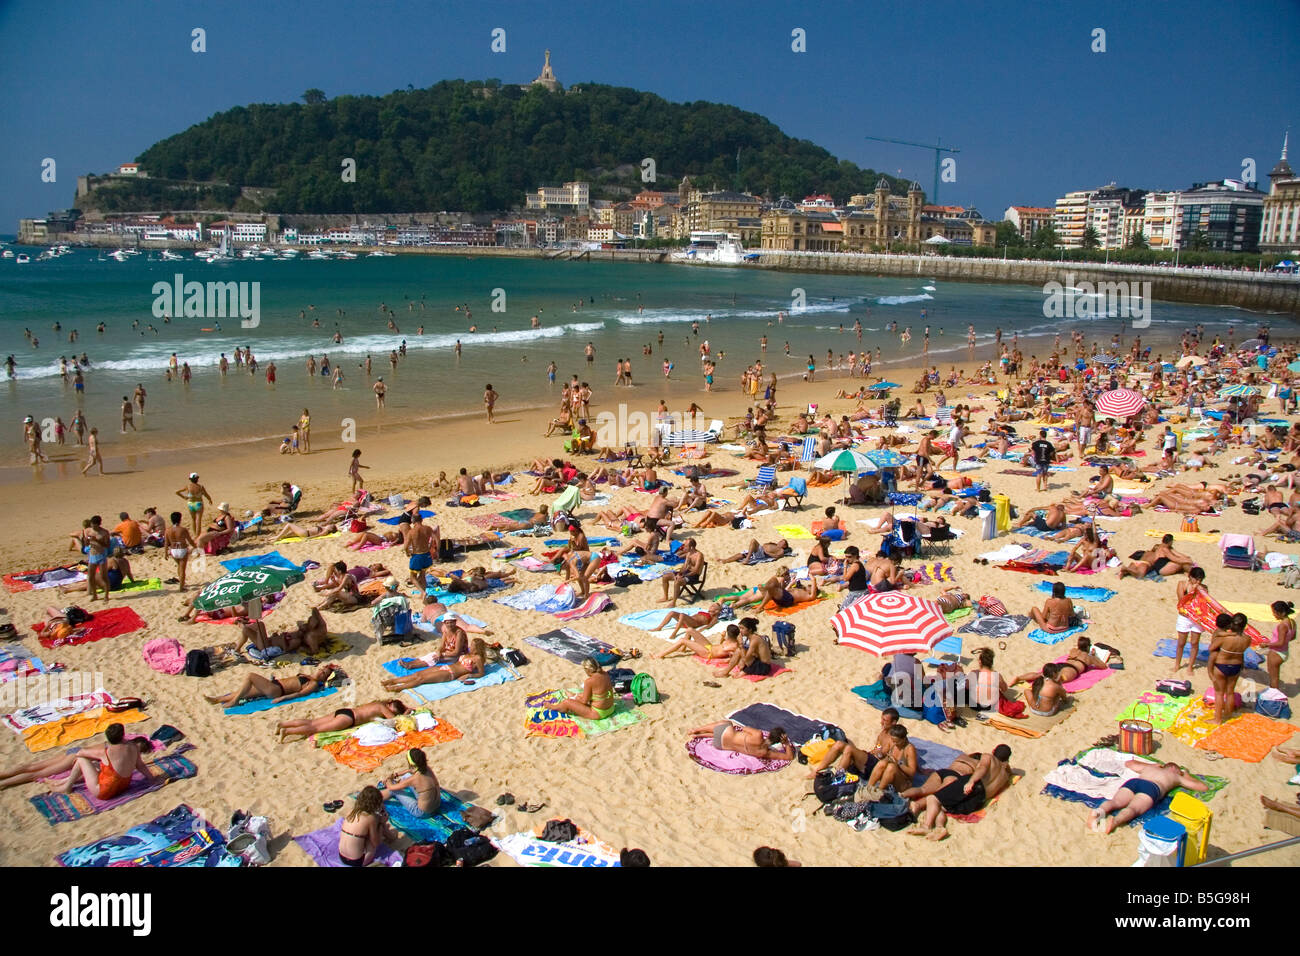 Beach scene at La Concha Bay in the city of Donostia San Sebastian Guipuzcoa Basque Country Northern Spain Stock Photo